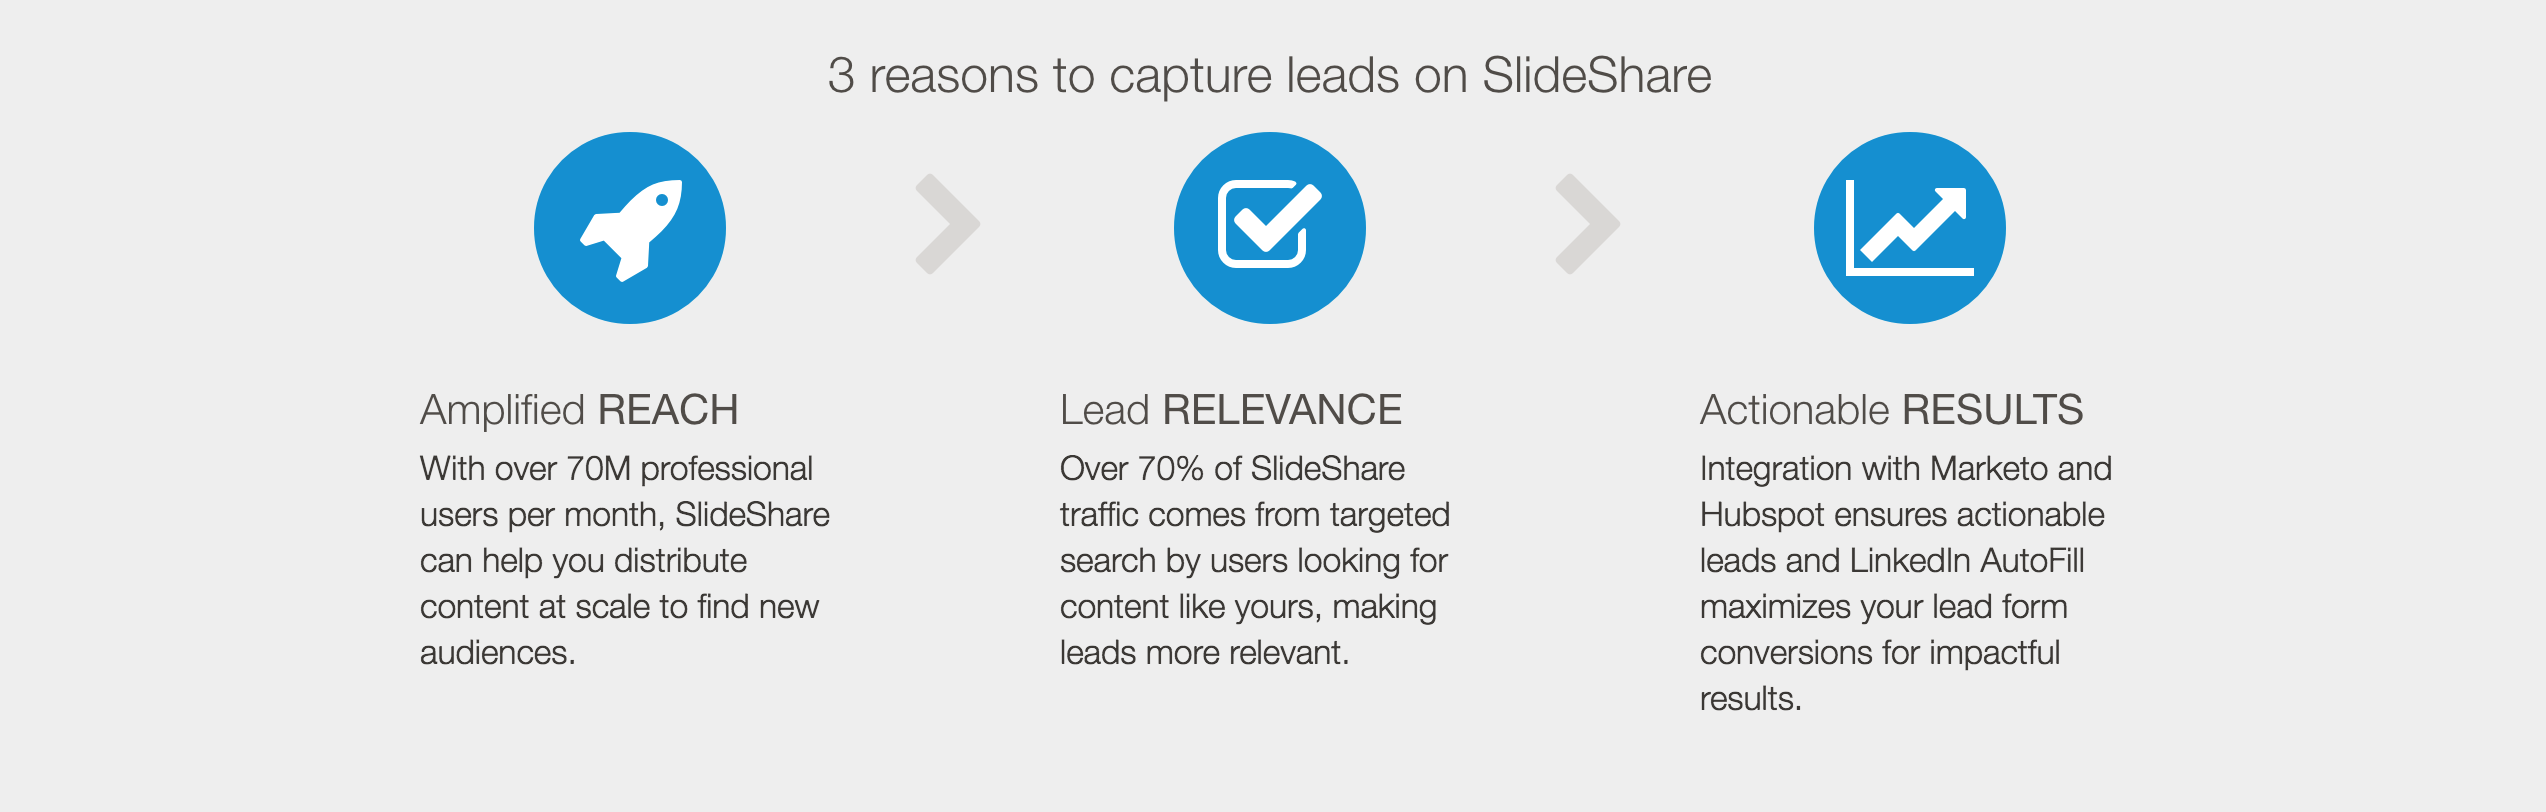 SlideShare Lead Generation